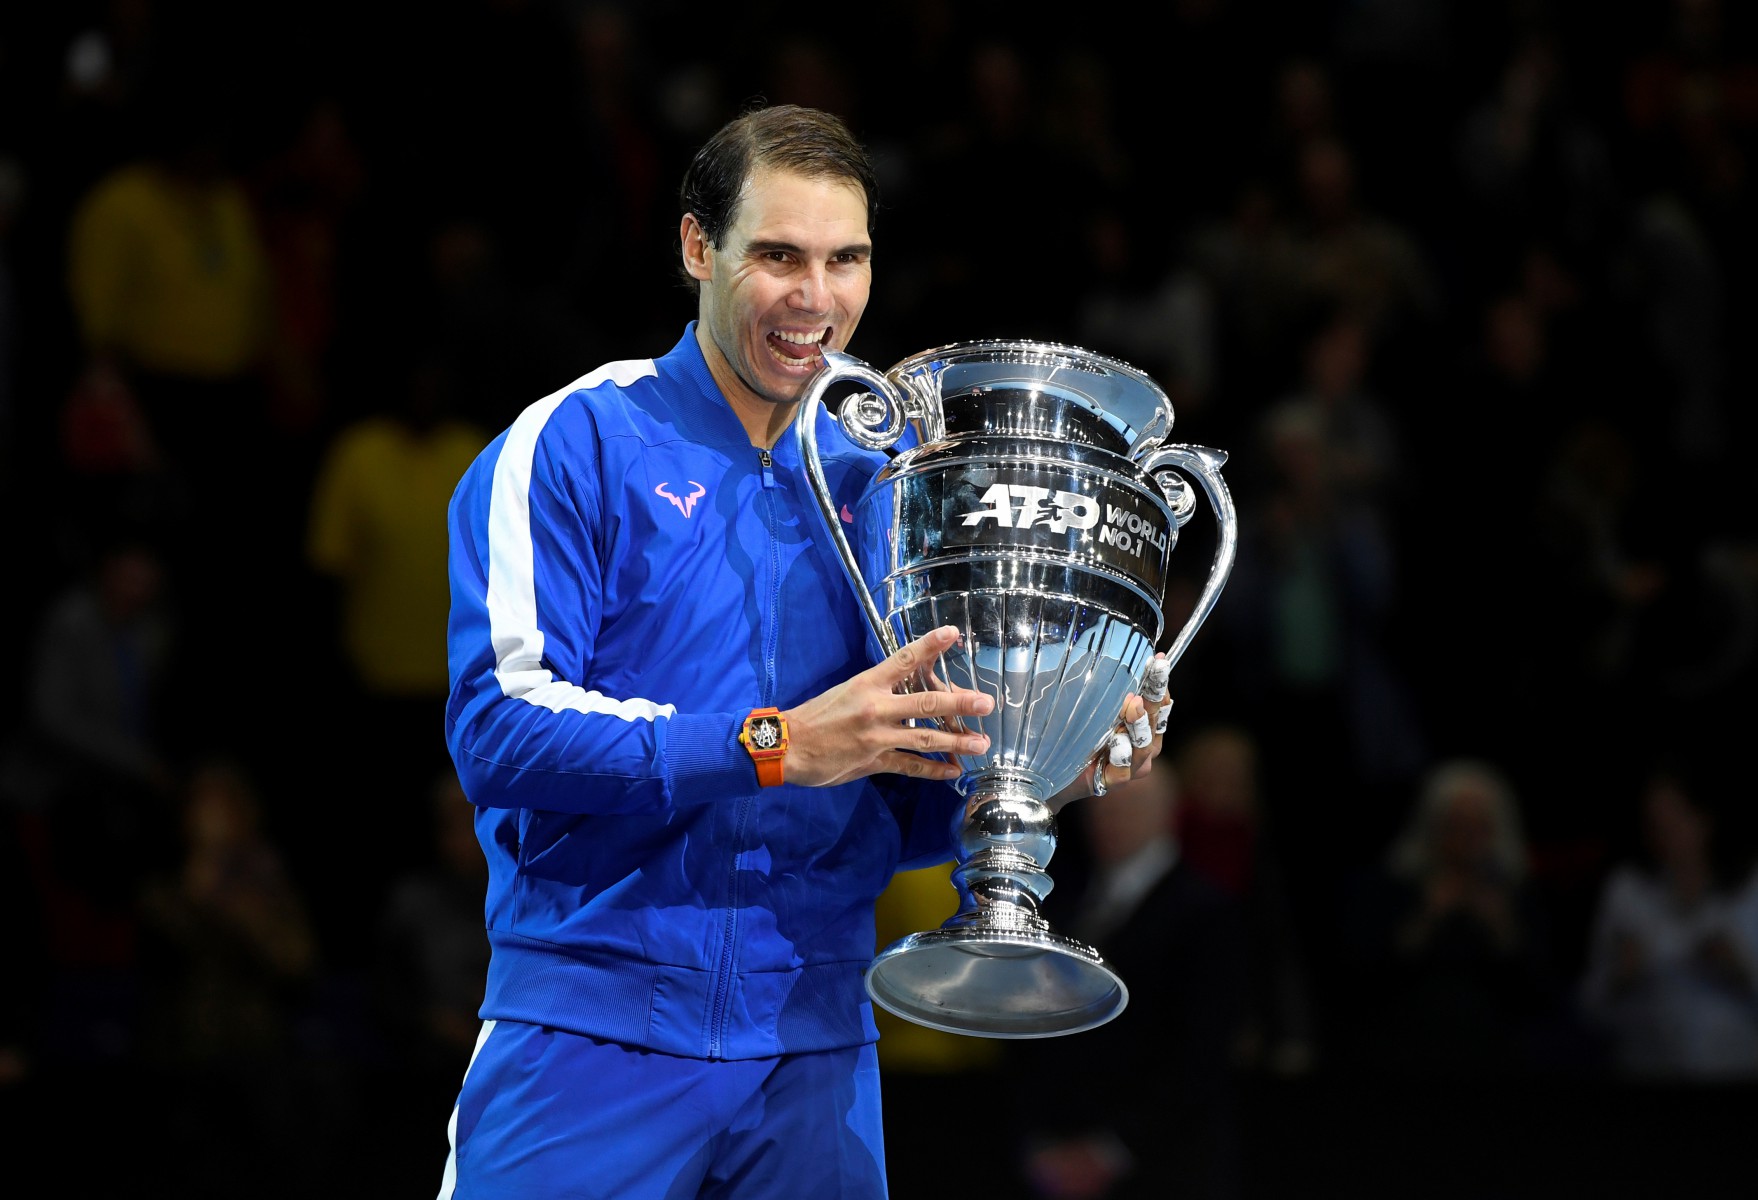 Nadal was crowned world No1 for the end of 2019 after Federer beat Novak Djokovic